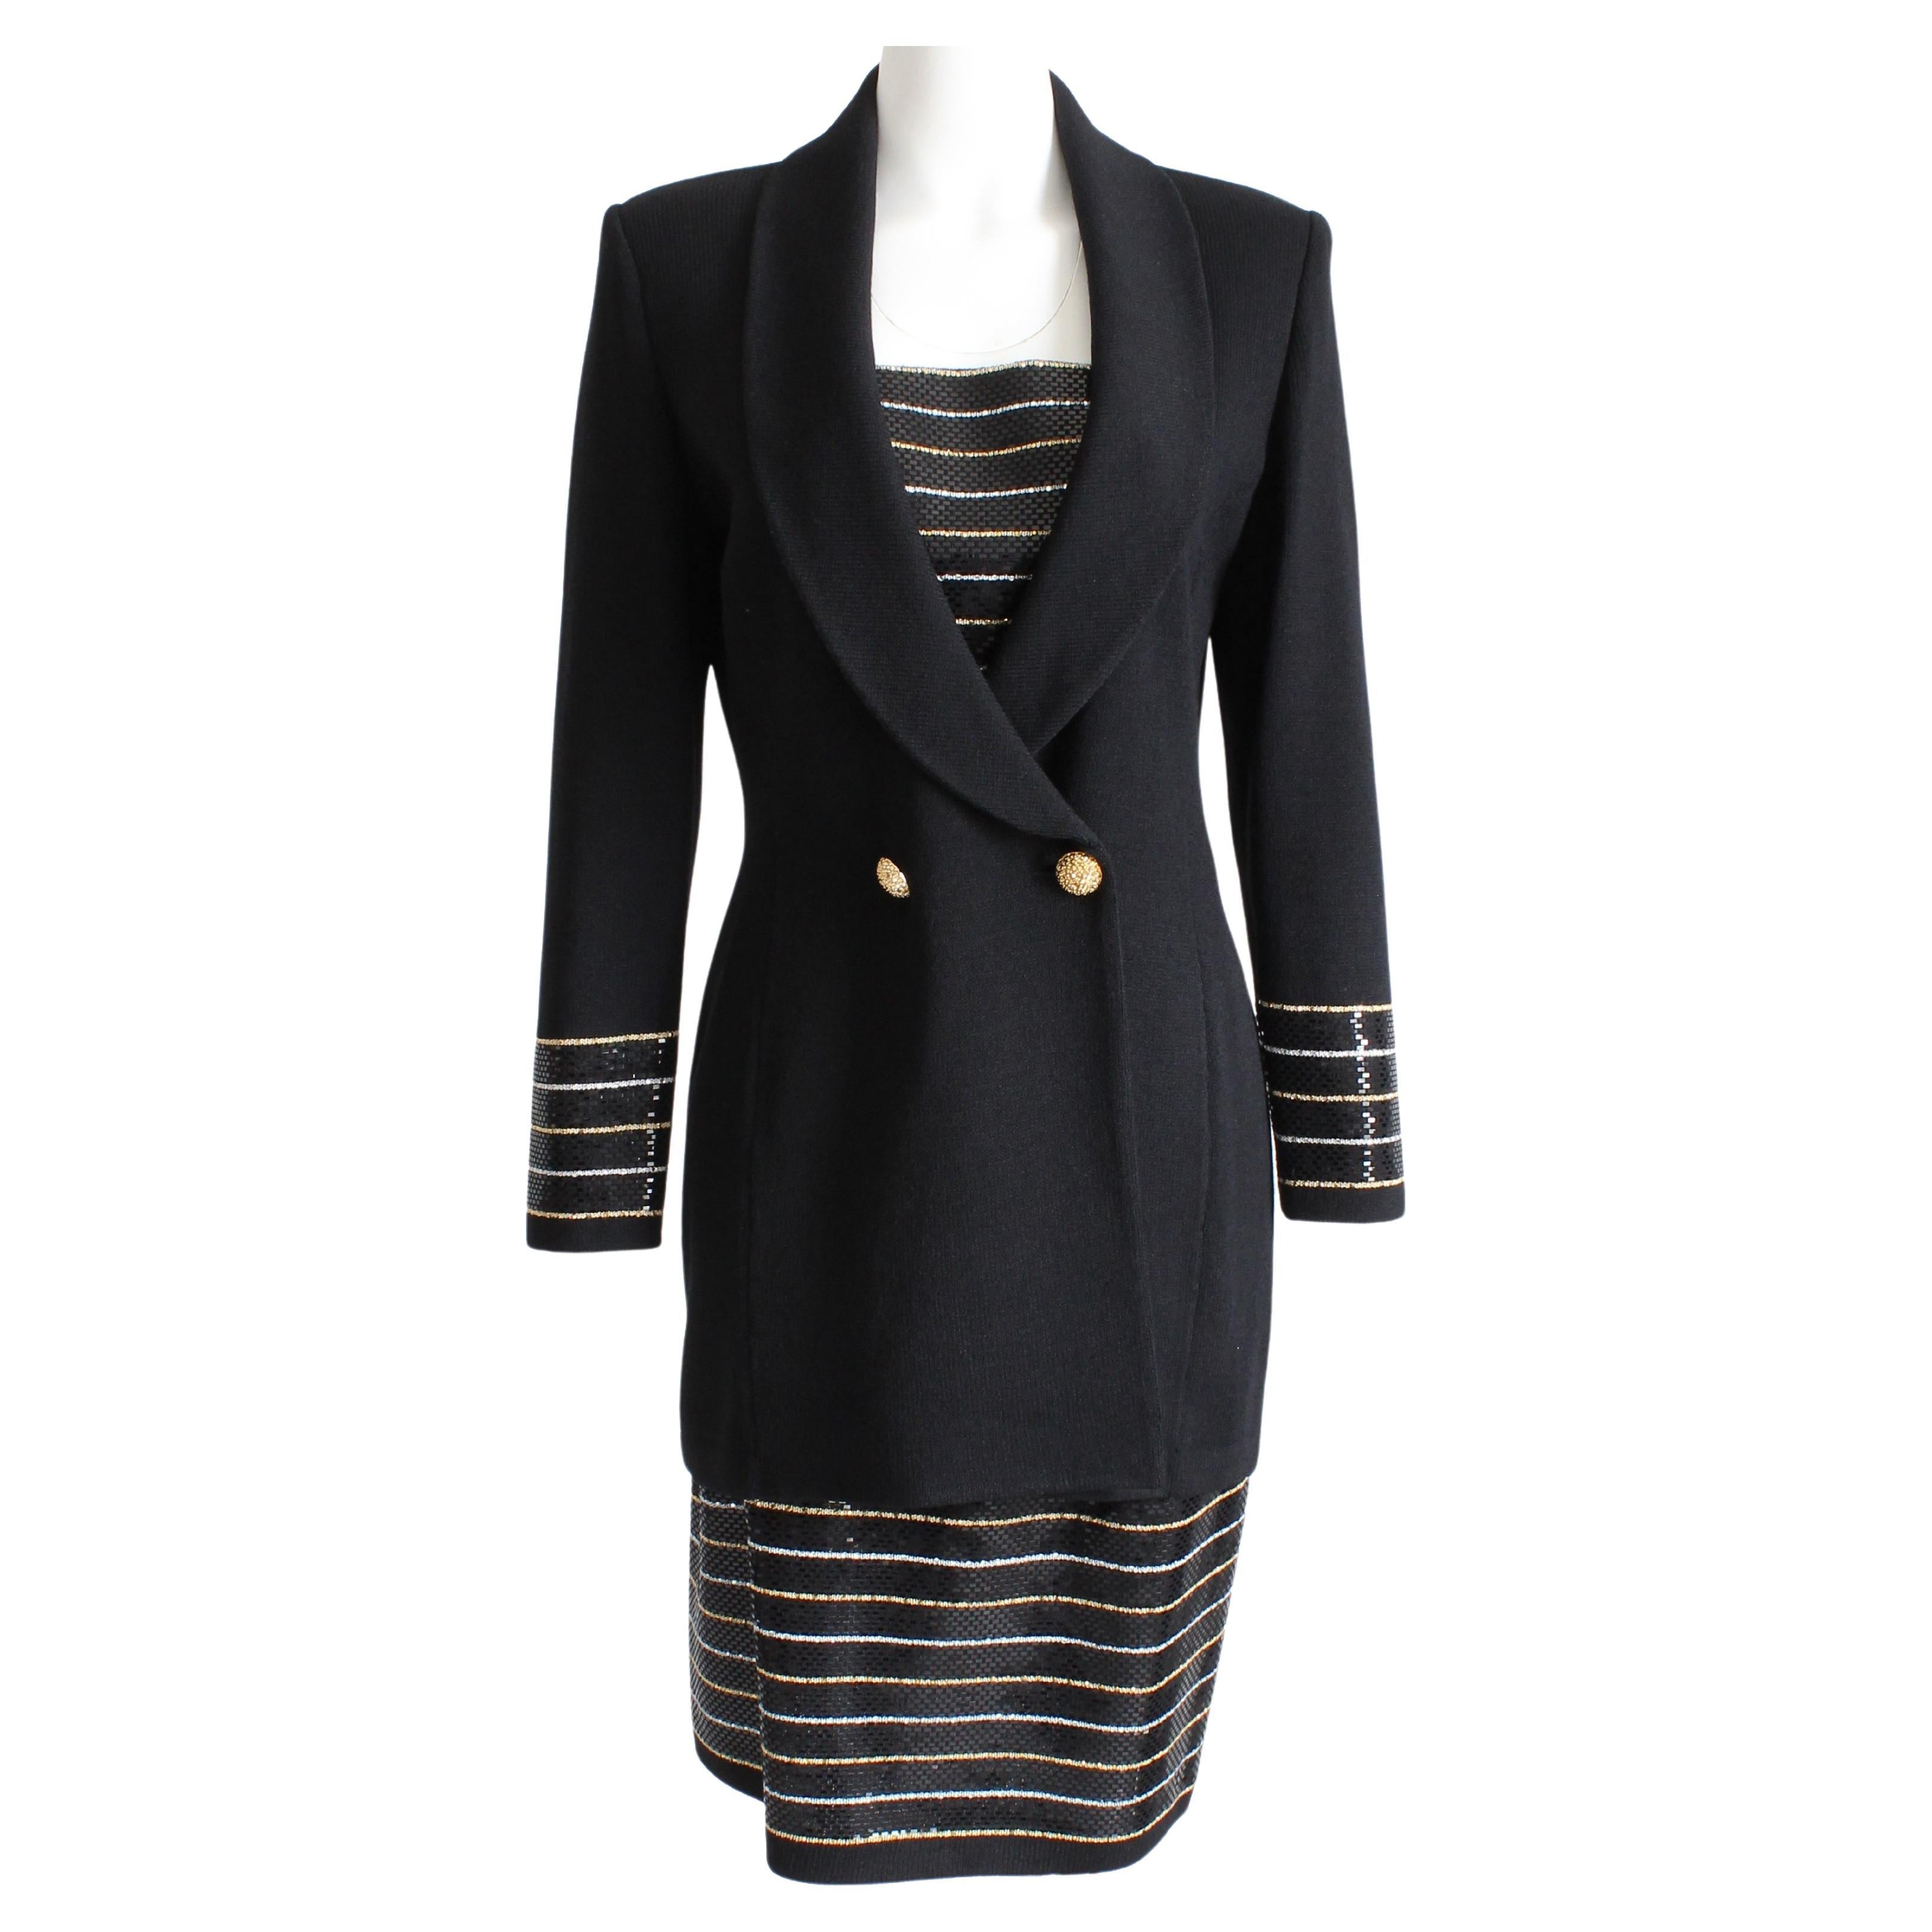 St John Suit Evening 2pc Jacket & Skirt Embellished Knit Black Gold White Sz 6  For Sale